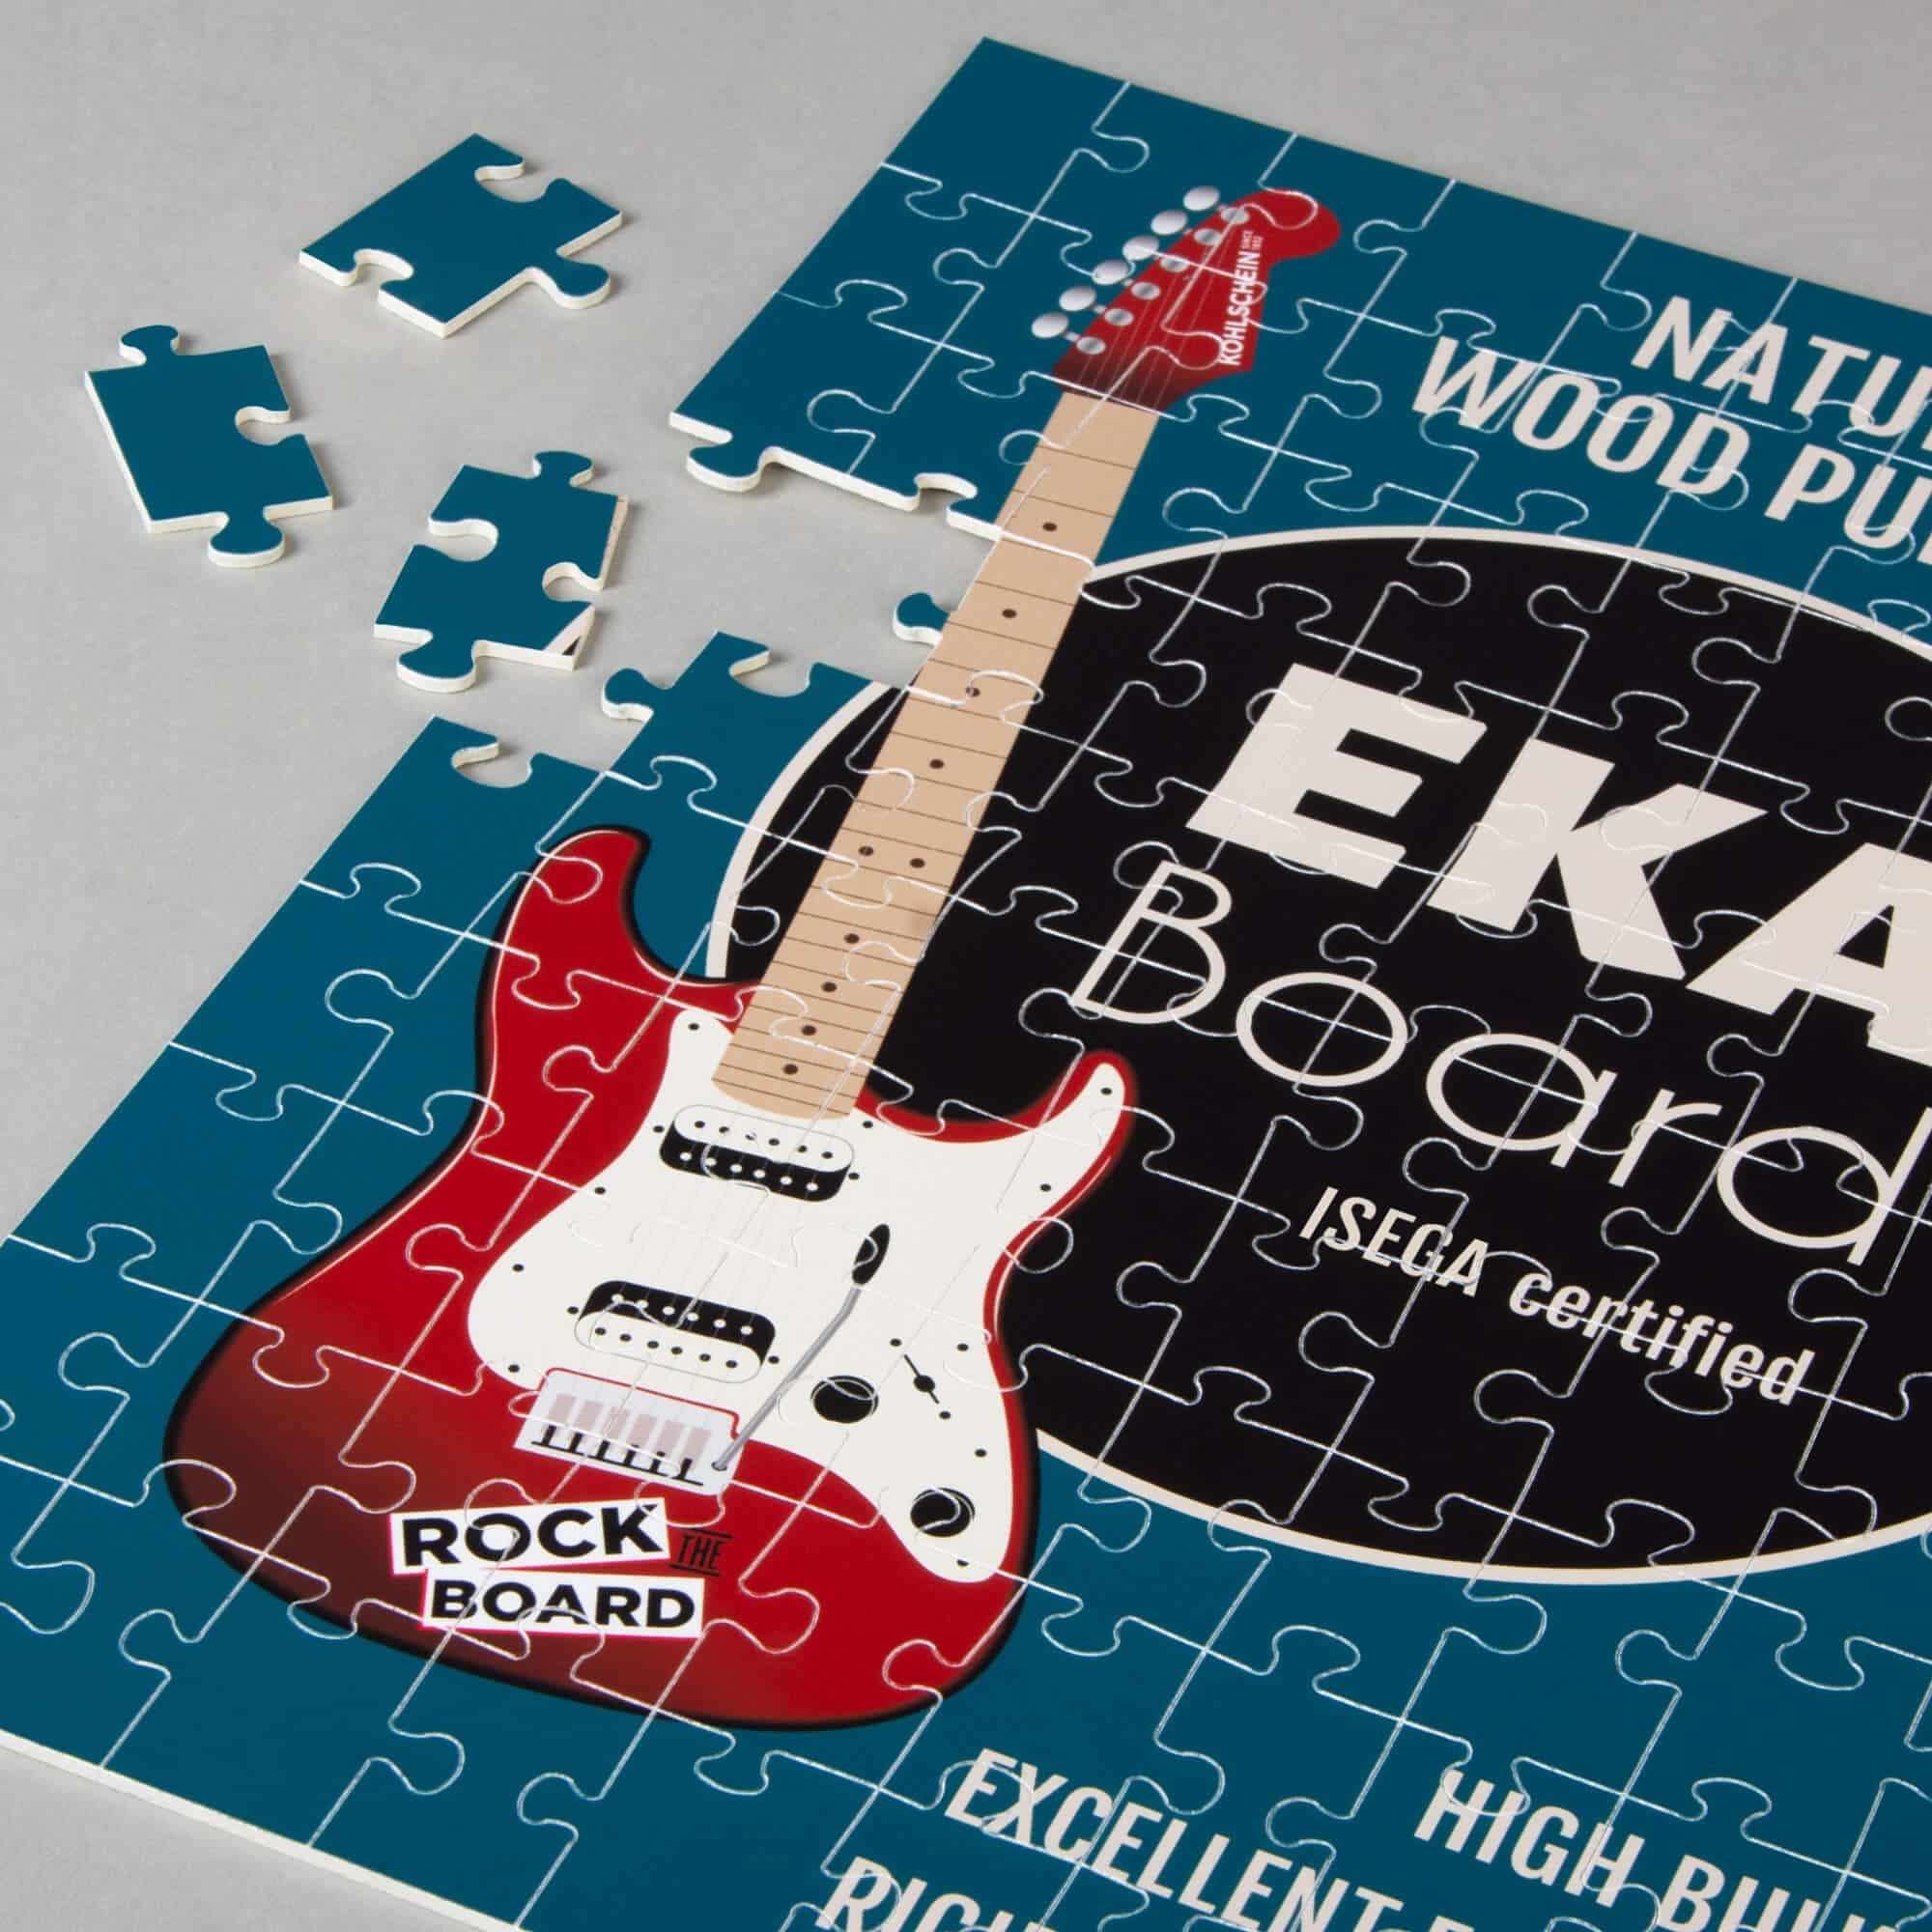 Eka board (Finn board) application example toy safe puzzle